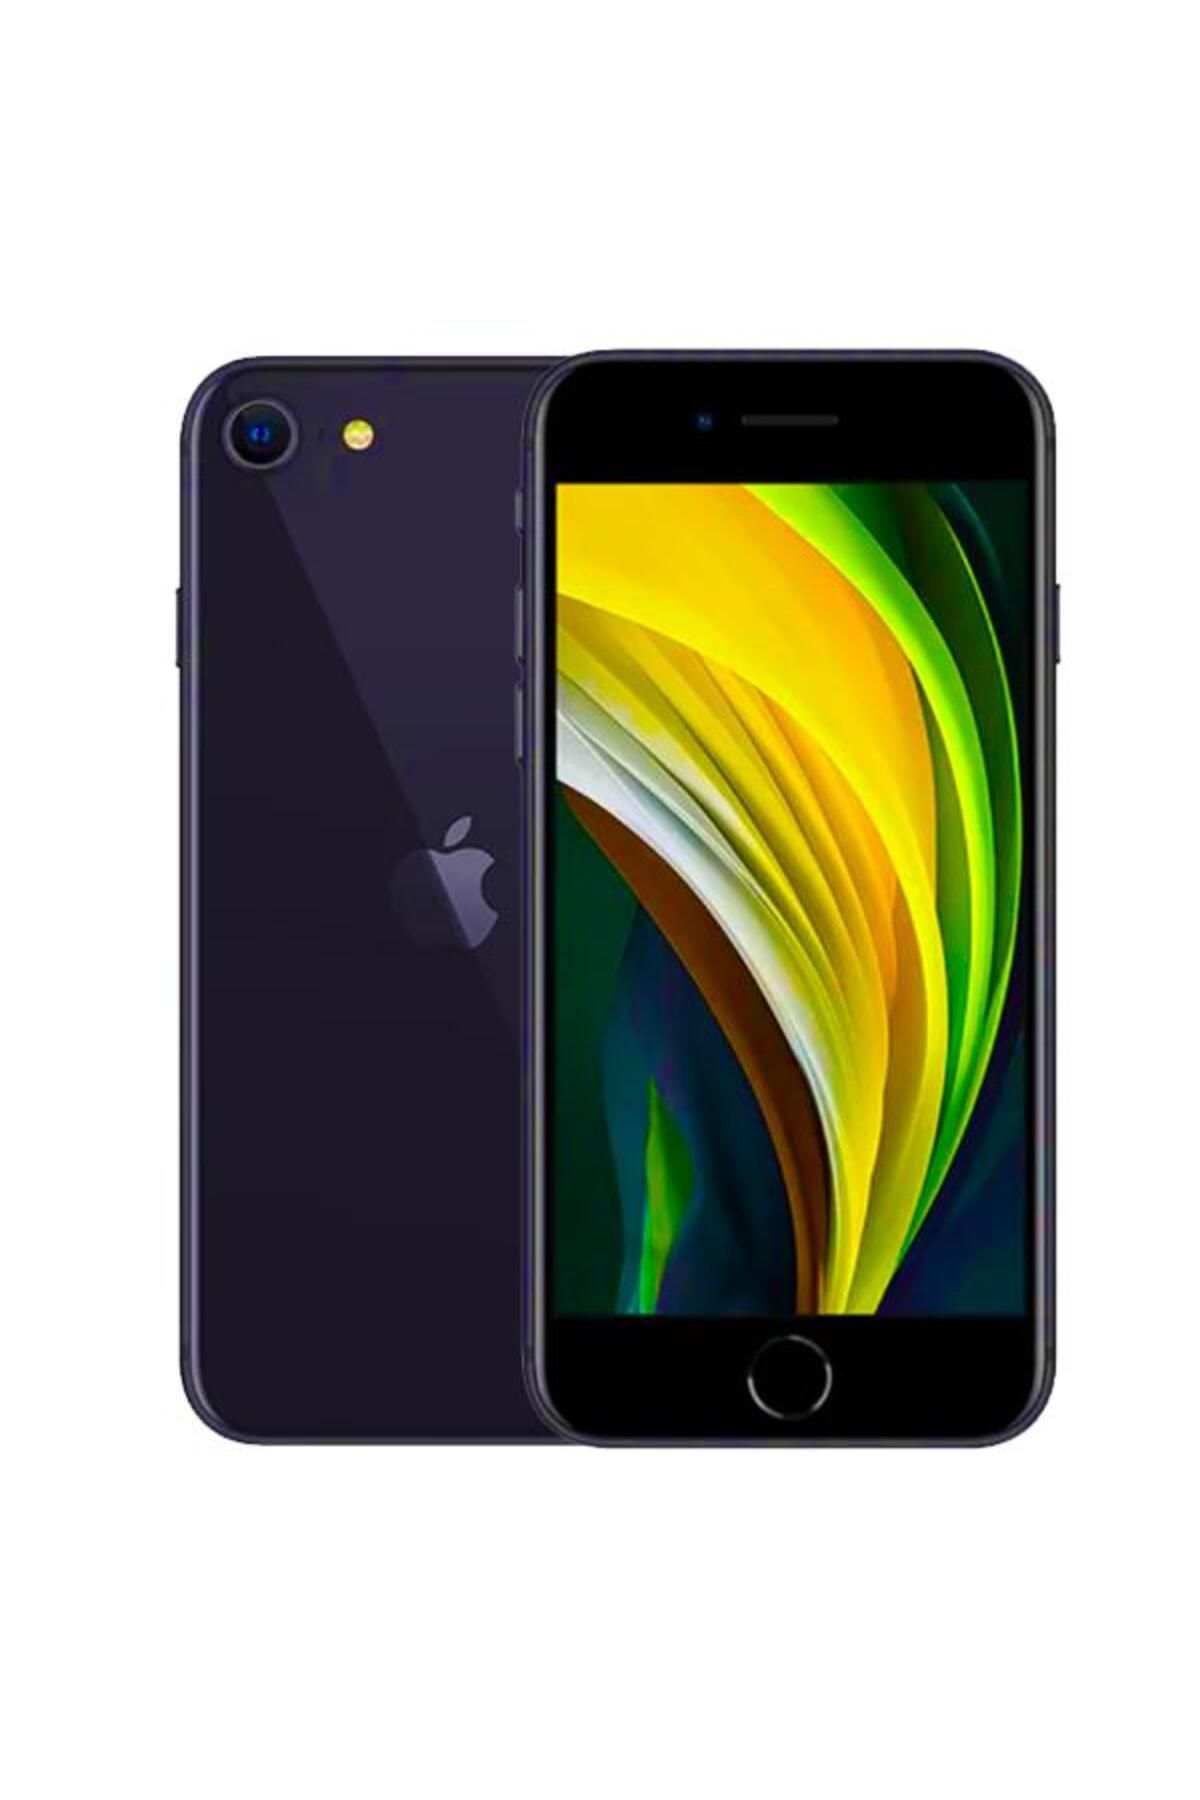 Apple Yenilenmiş Iphone Se 2020 Black 64gb B Kalite (12 AY GARANTİLİ)